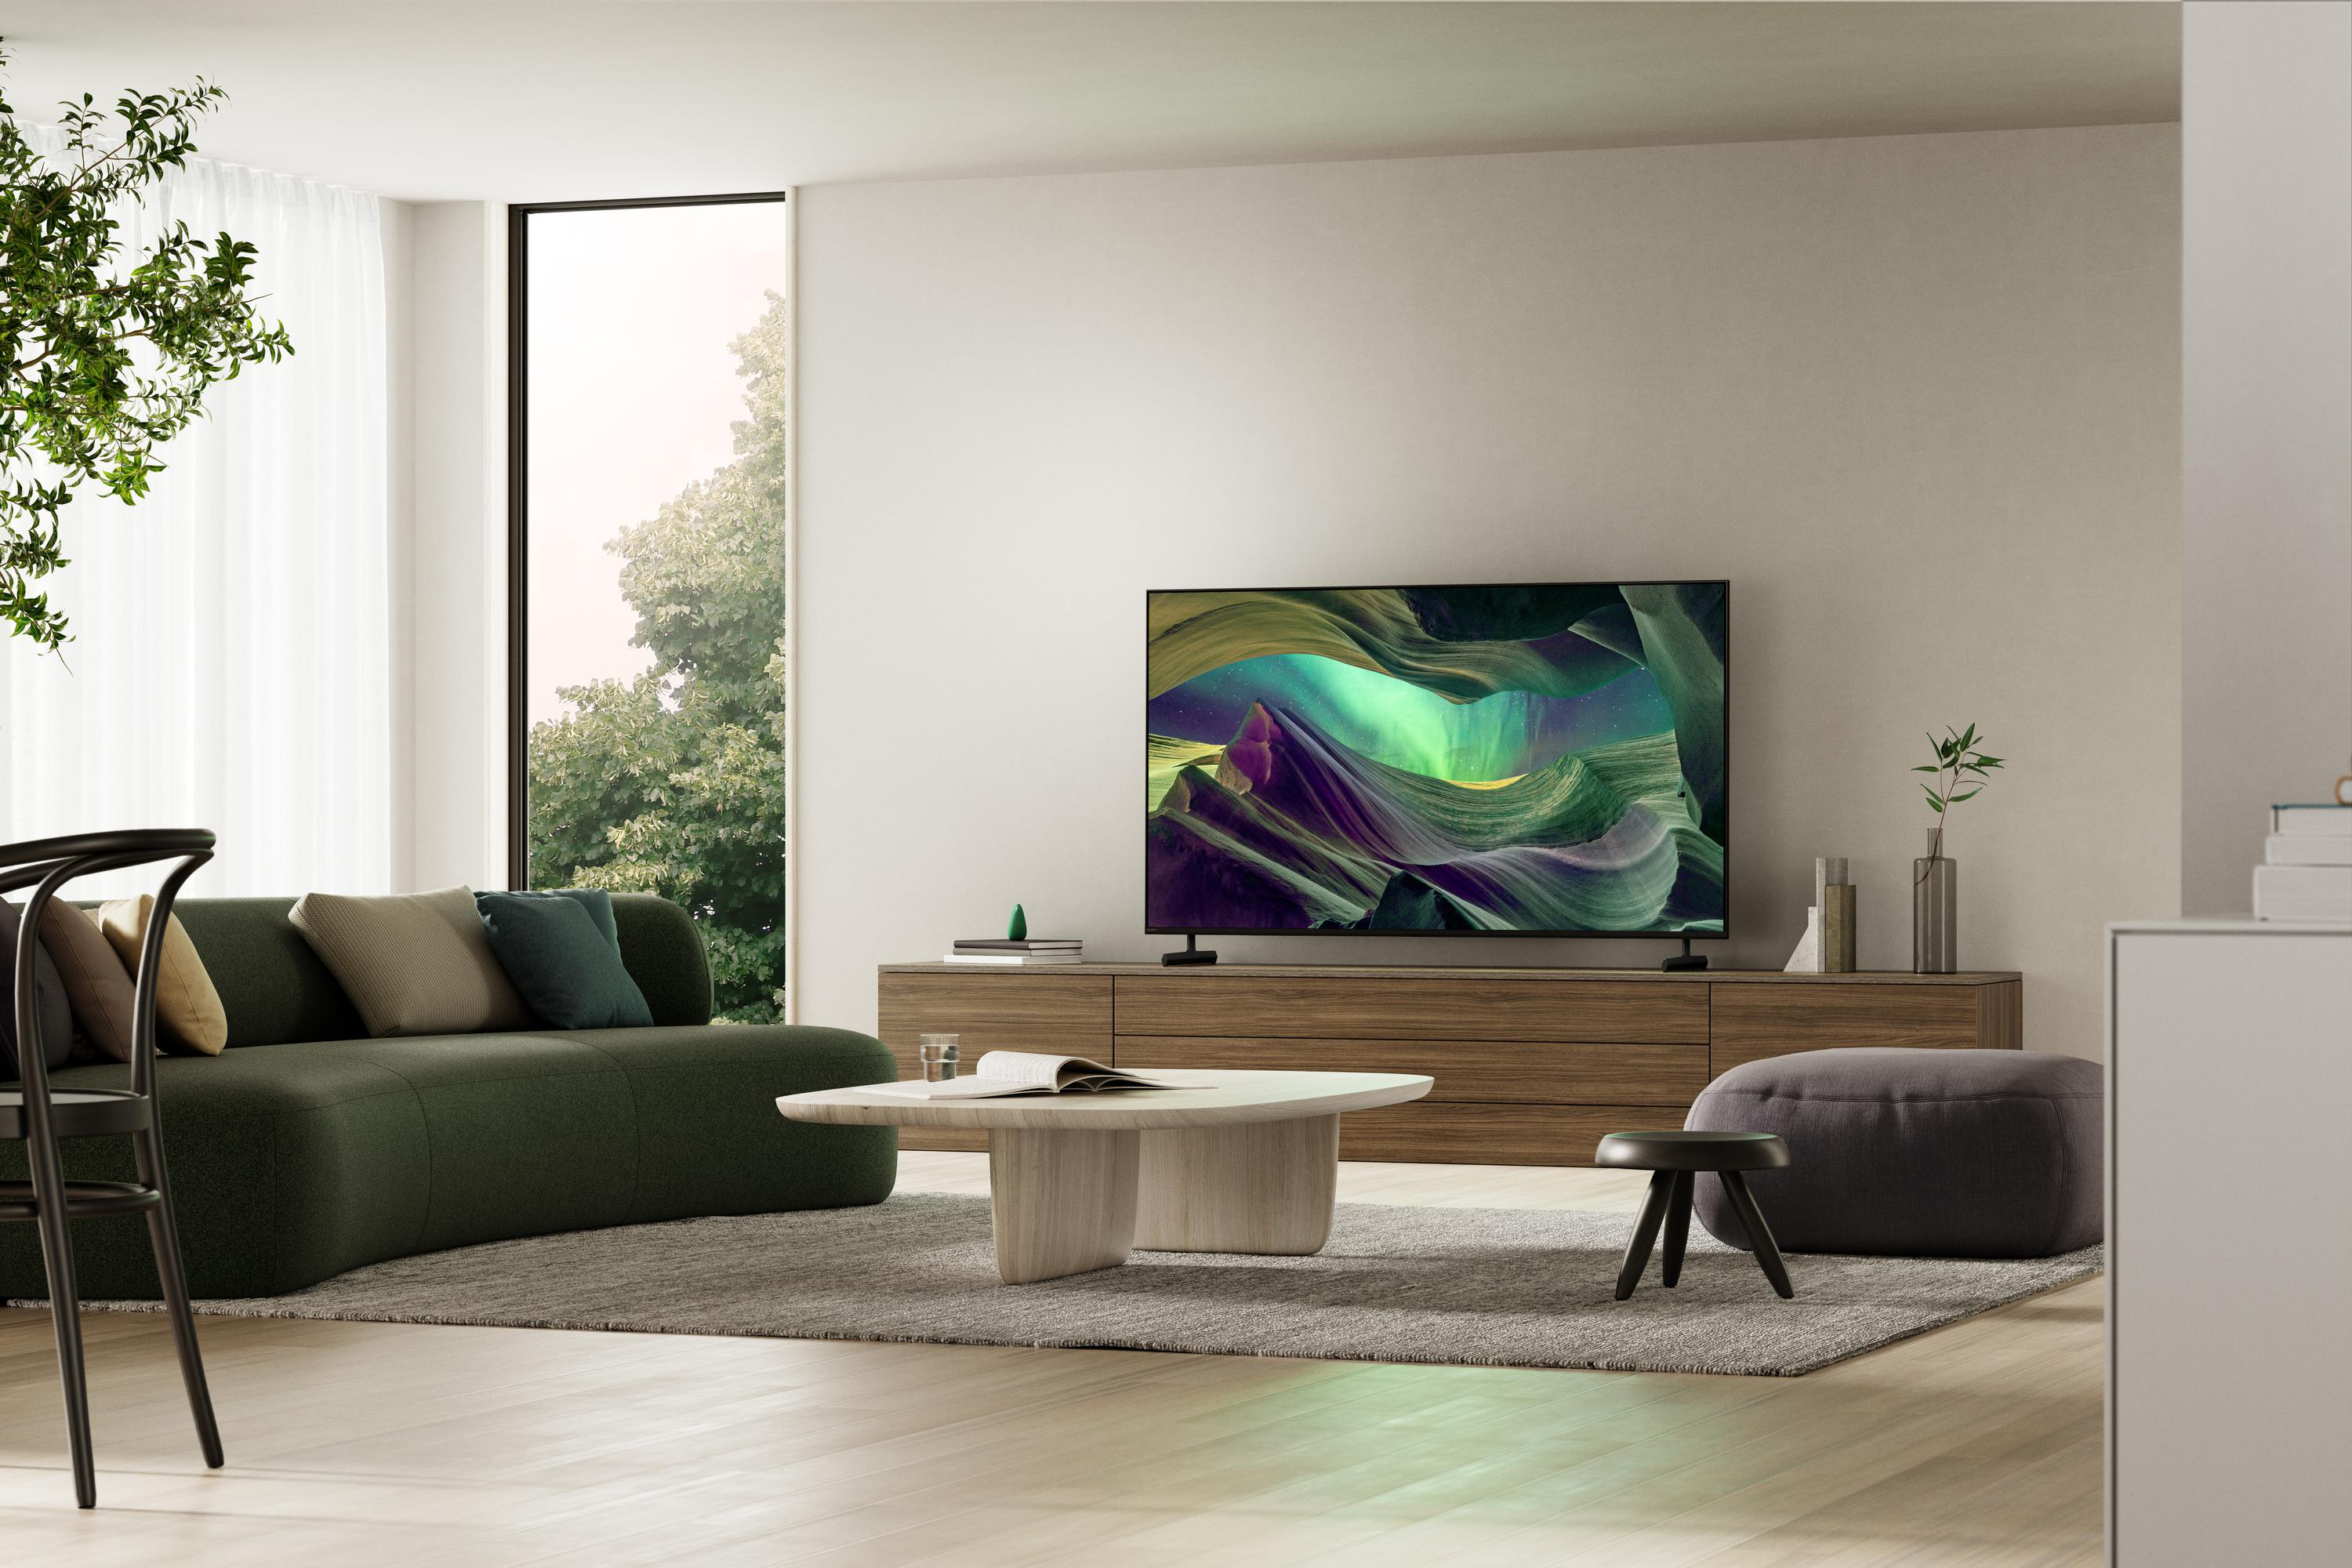 cm, SONY TV) Zoll BRAVIA TV, / 75 4K, Google UHD TV (Flat, LED SMART KD-75X85L 189